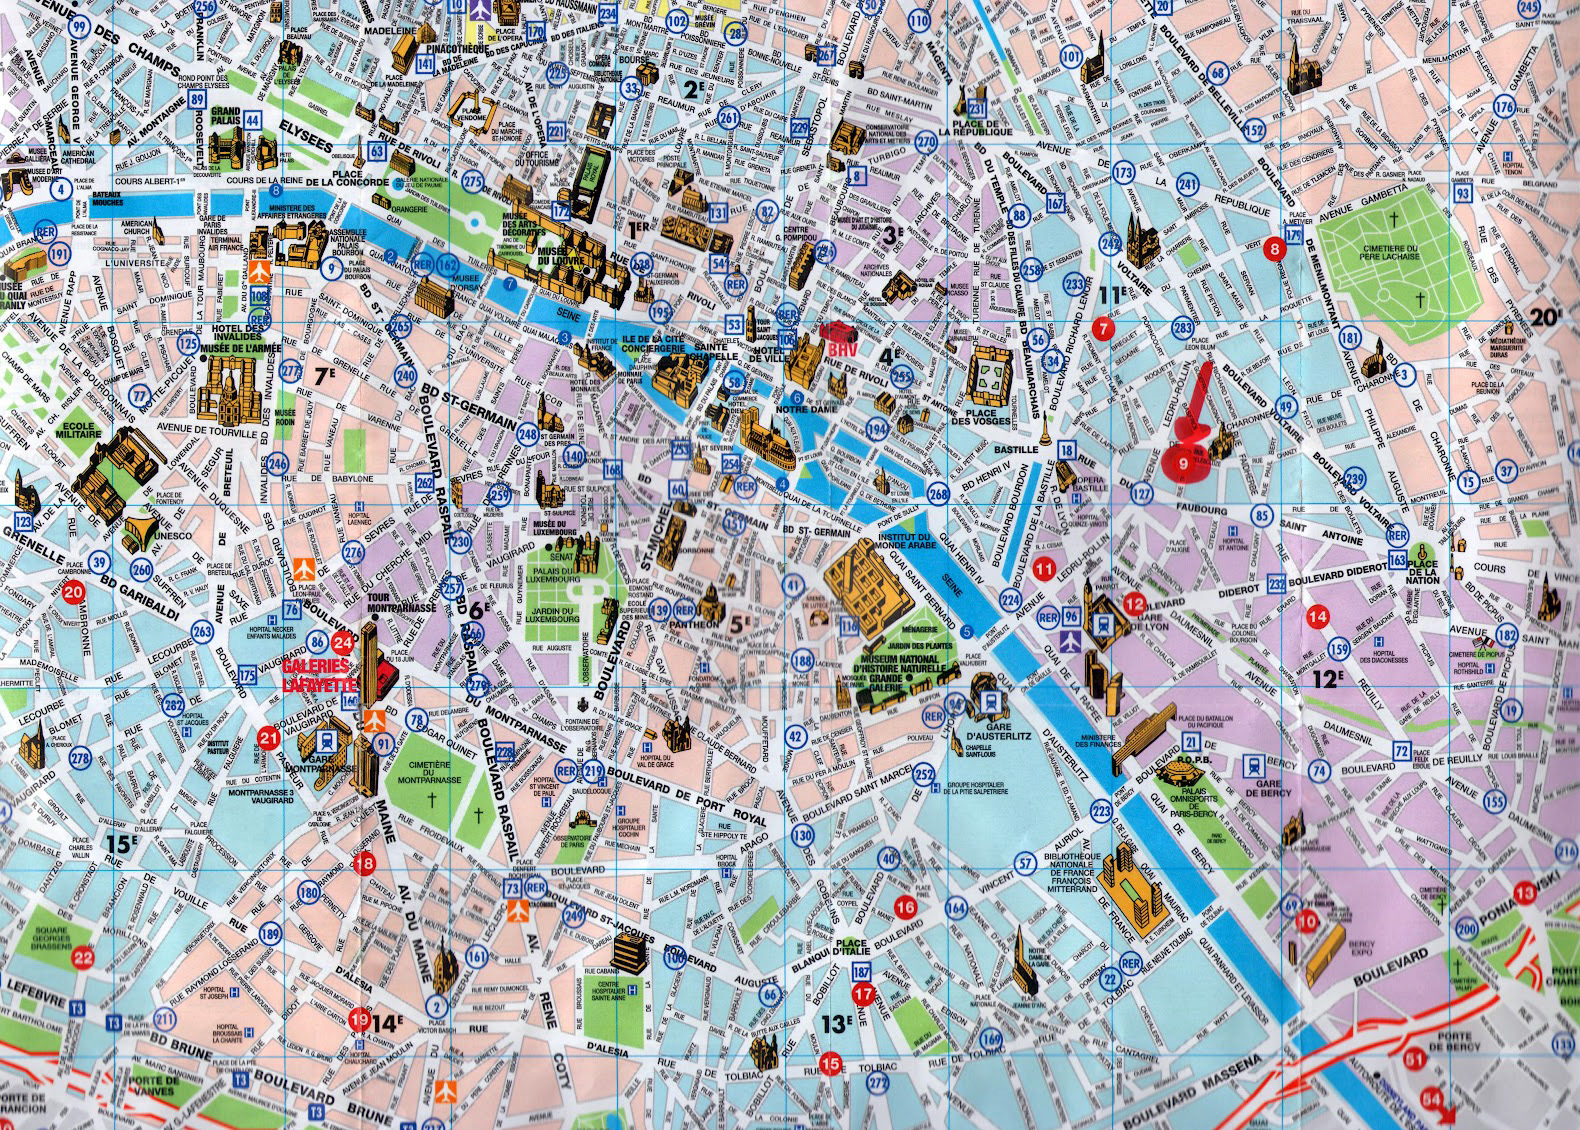 Detailed Tourist Map Of Central Part Of Paris City 